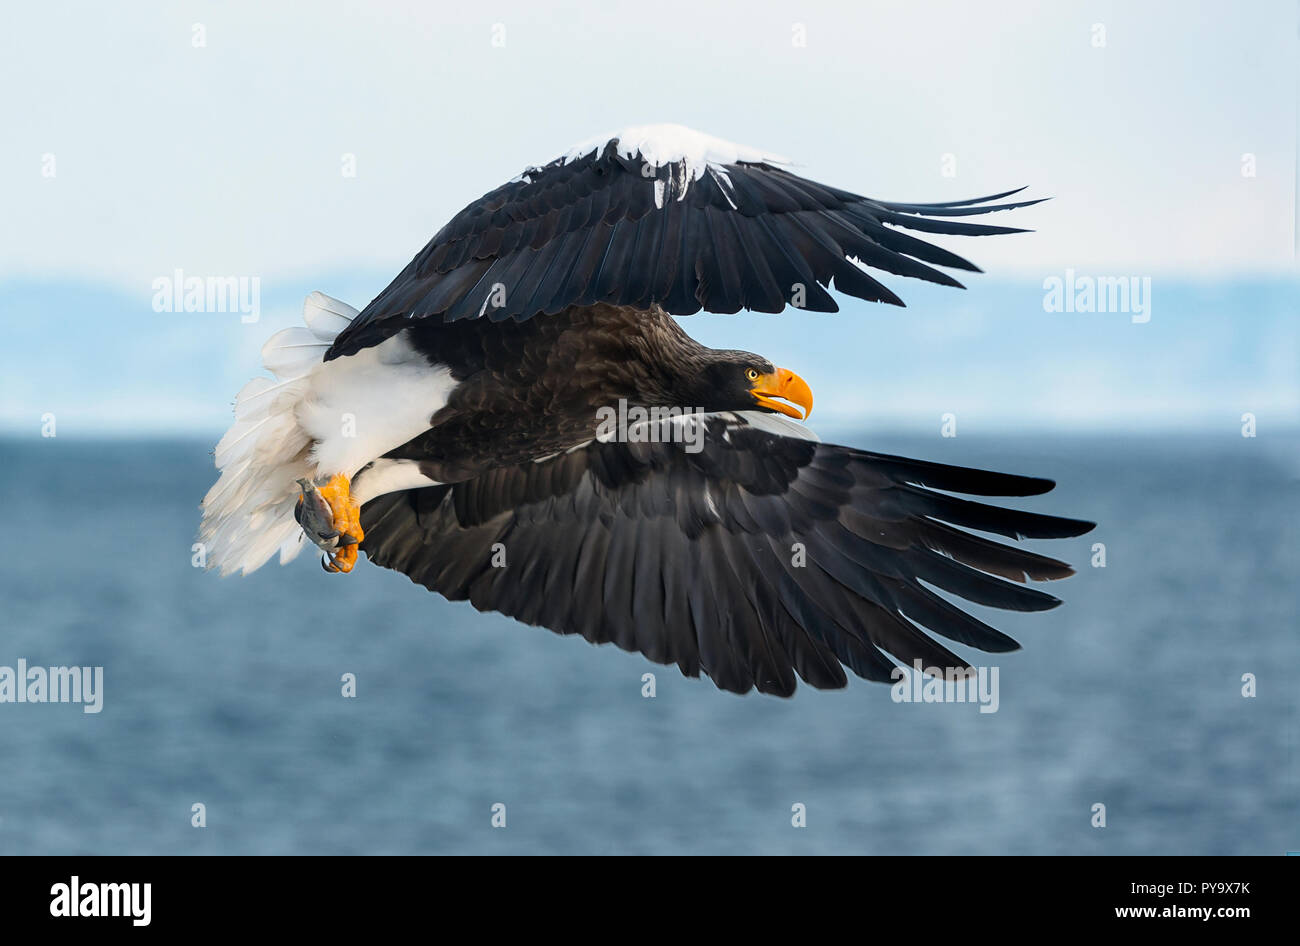 Adult Steller's sea eagle in flight. Scientific name: Haliaeetus pelagicus. Blue sky and ocean background. Stock Photo